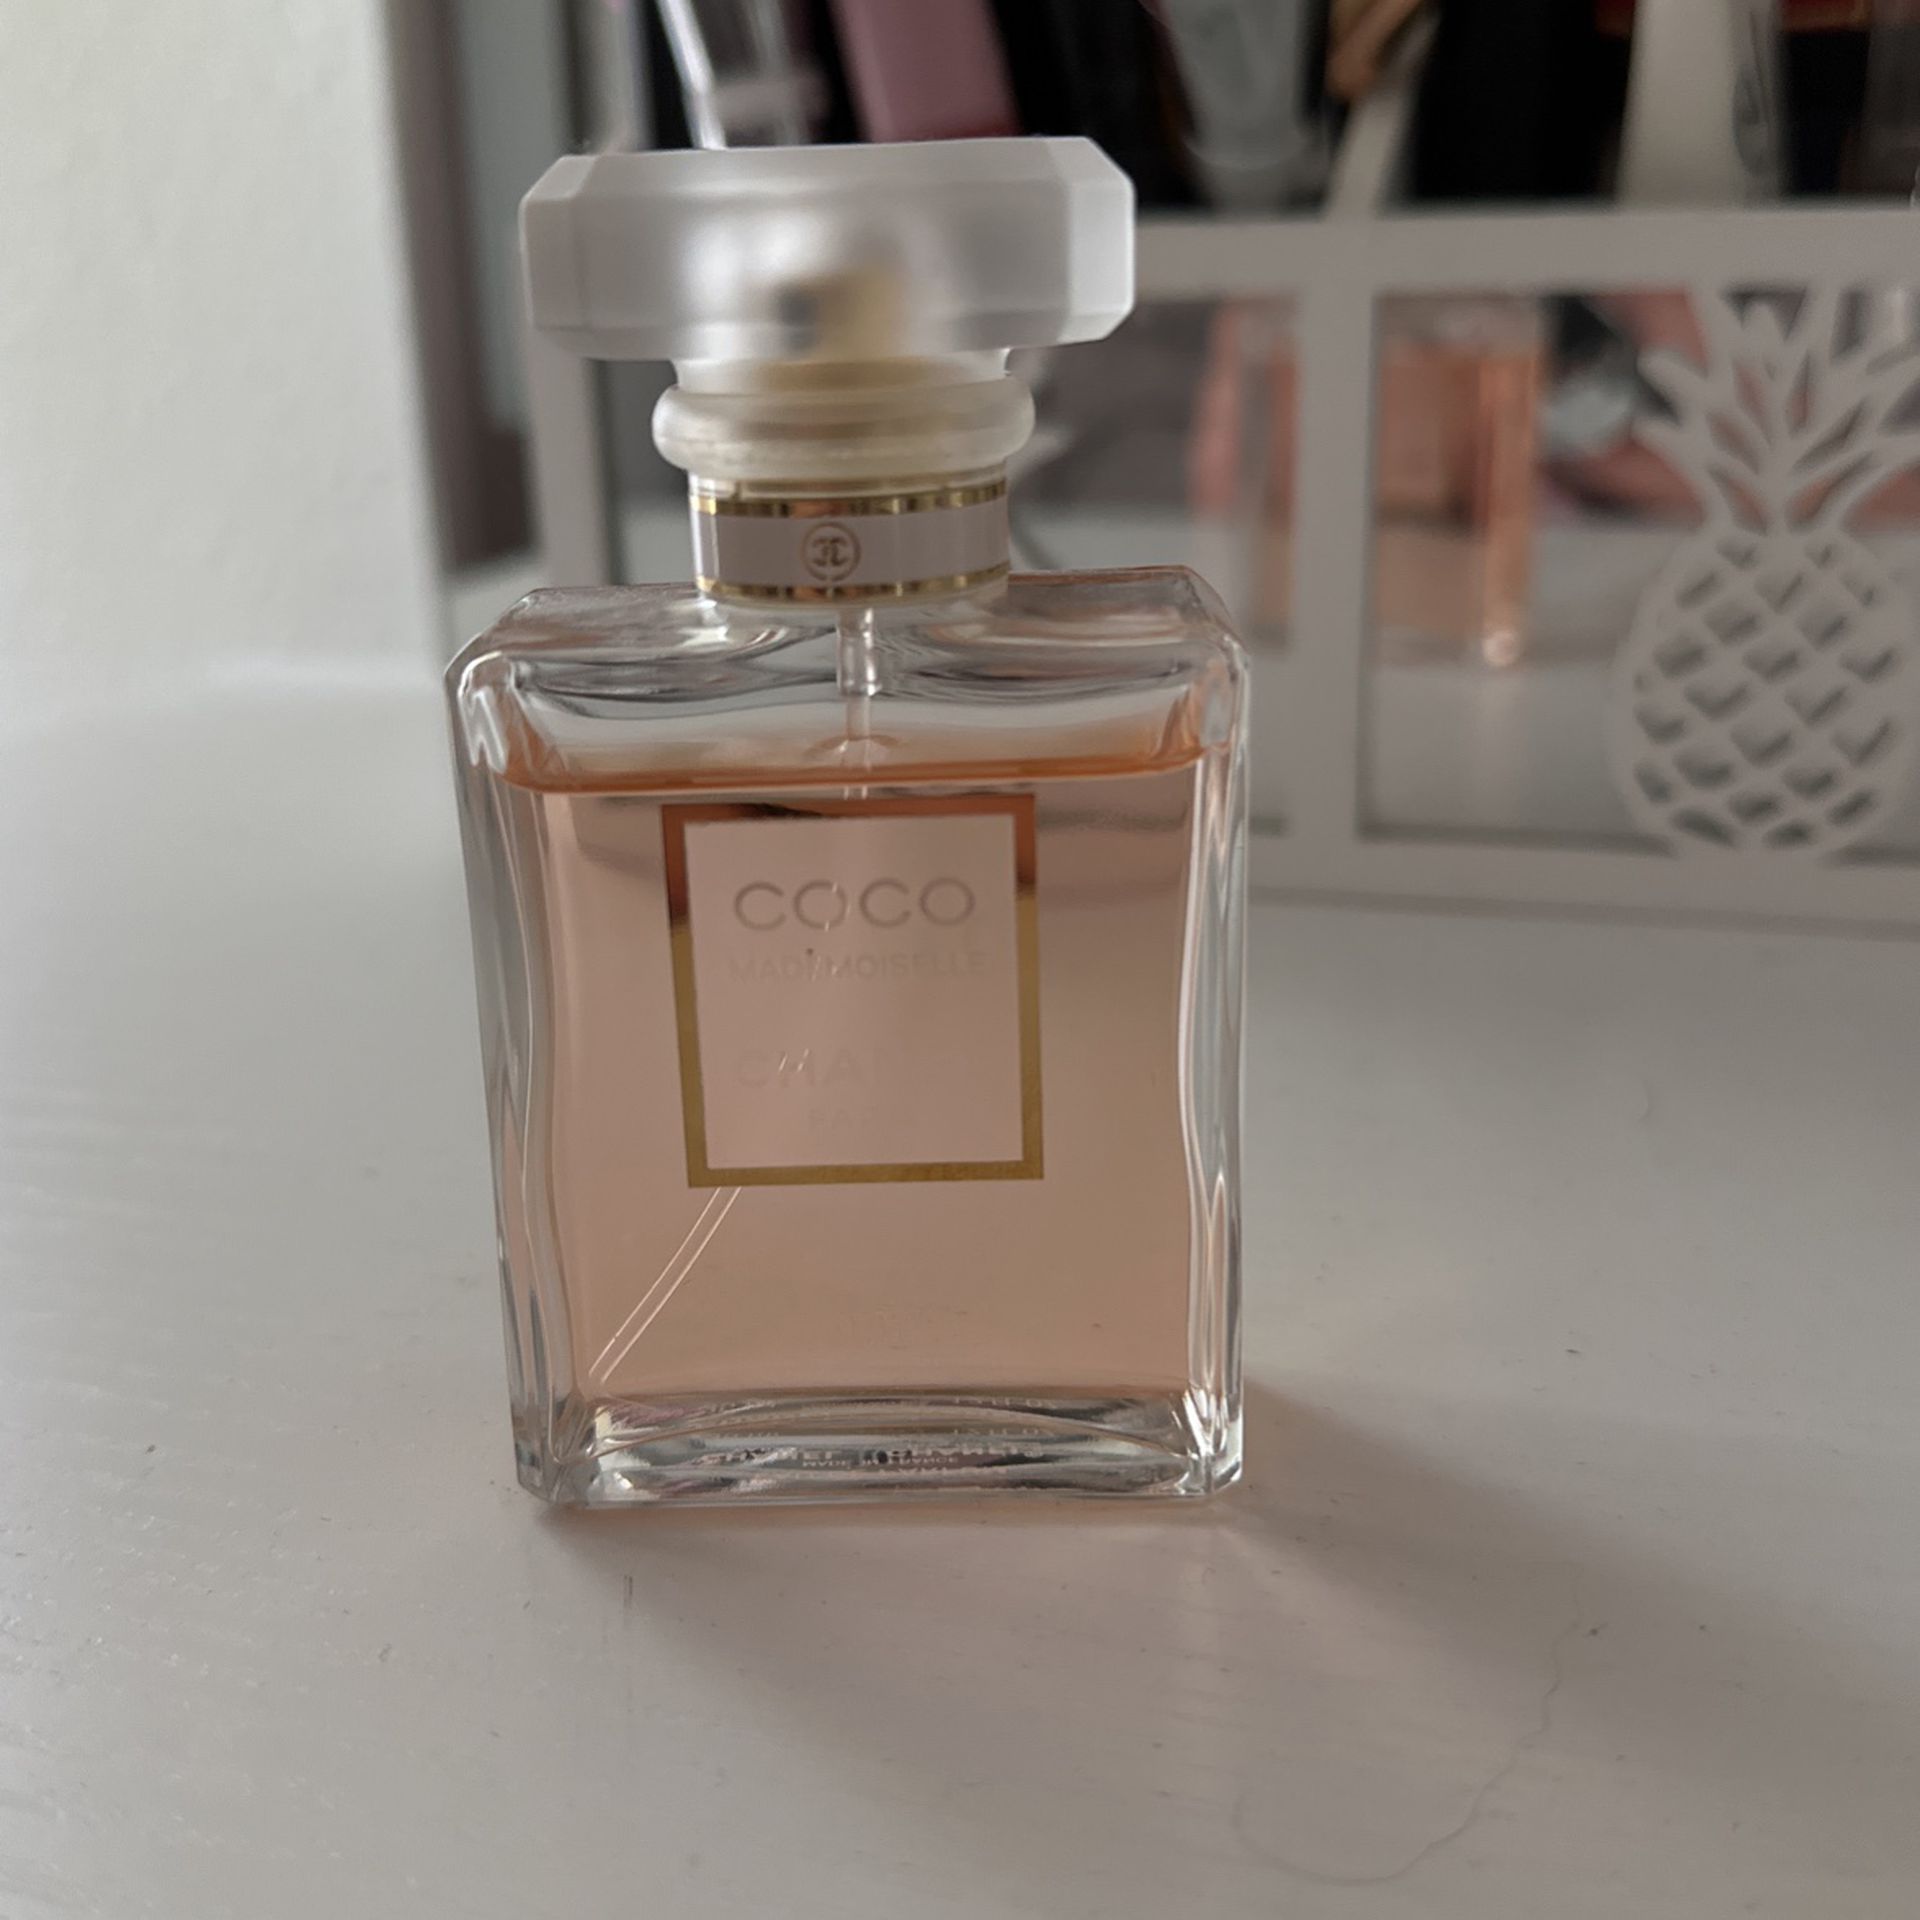 Coco mademoiselle Perfume for Sale in Auburn, WA - OfferUp